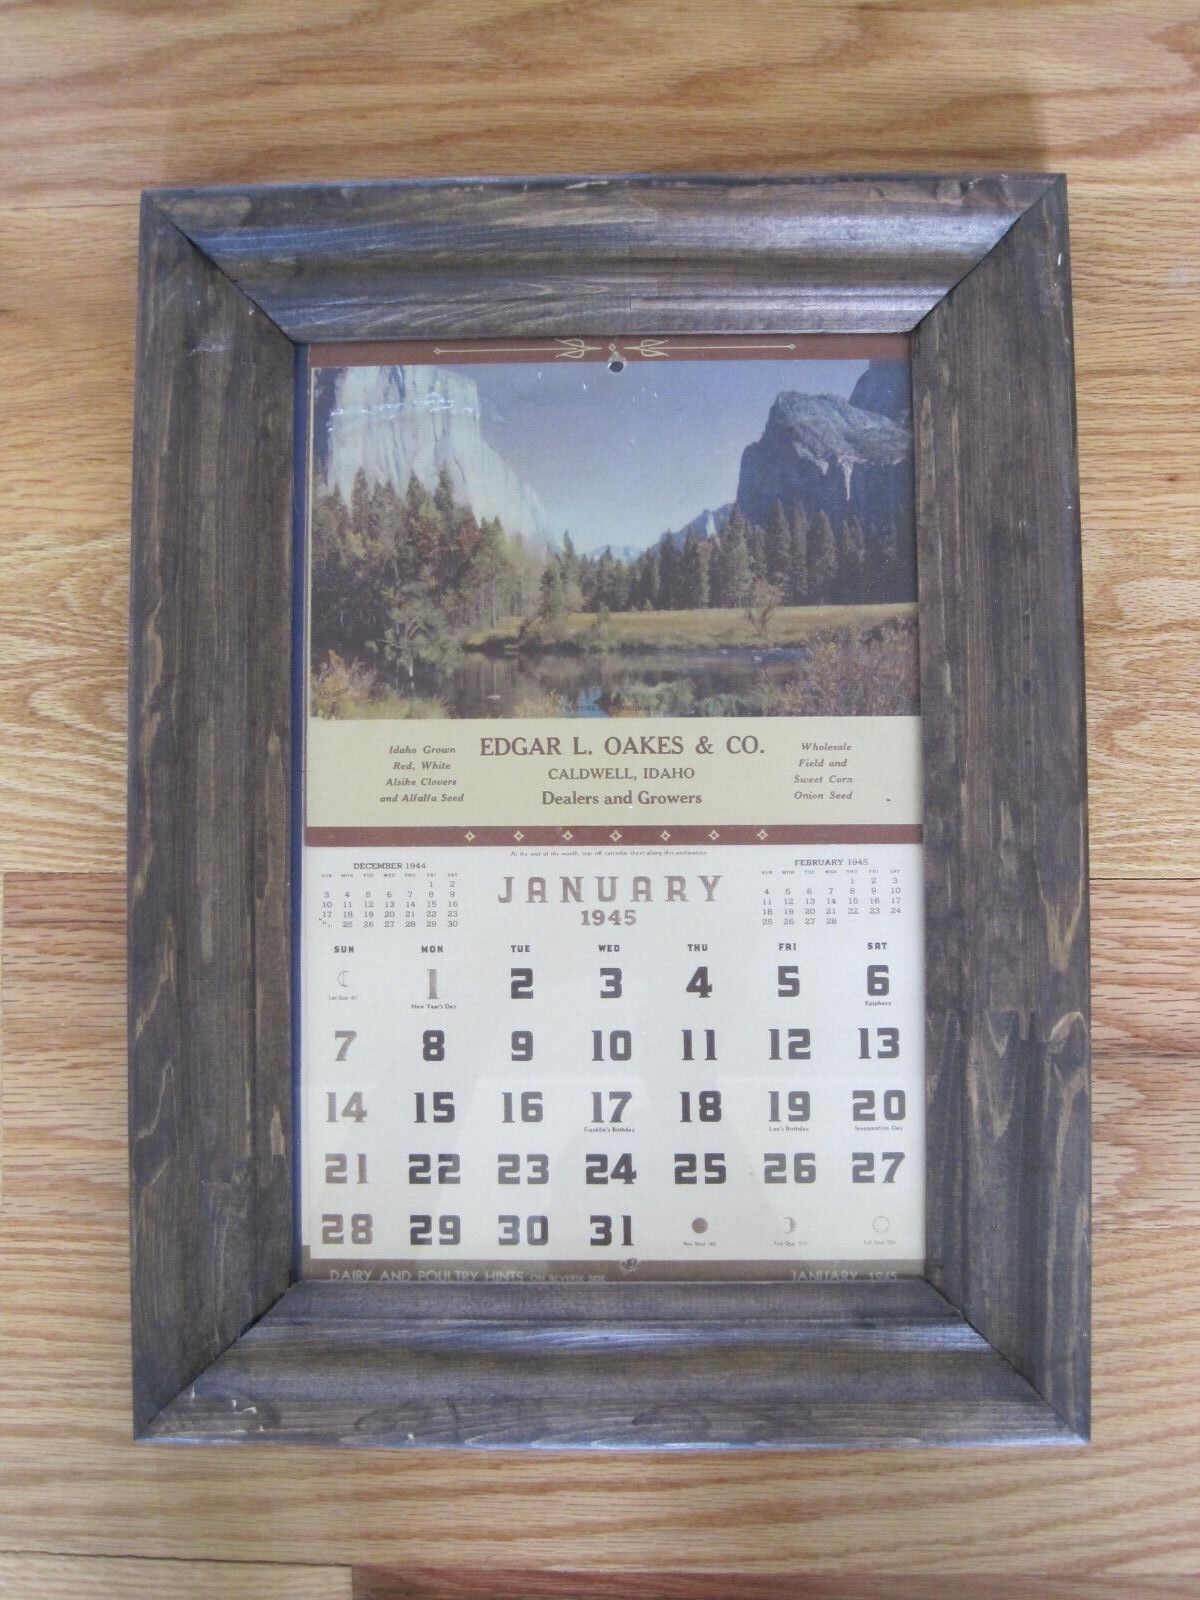 1945 Caldwell Idaho Calendar Advertising Egar C Oakes & Co. Dealers In Frame